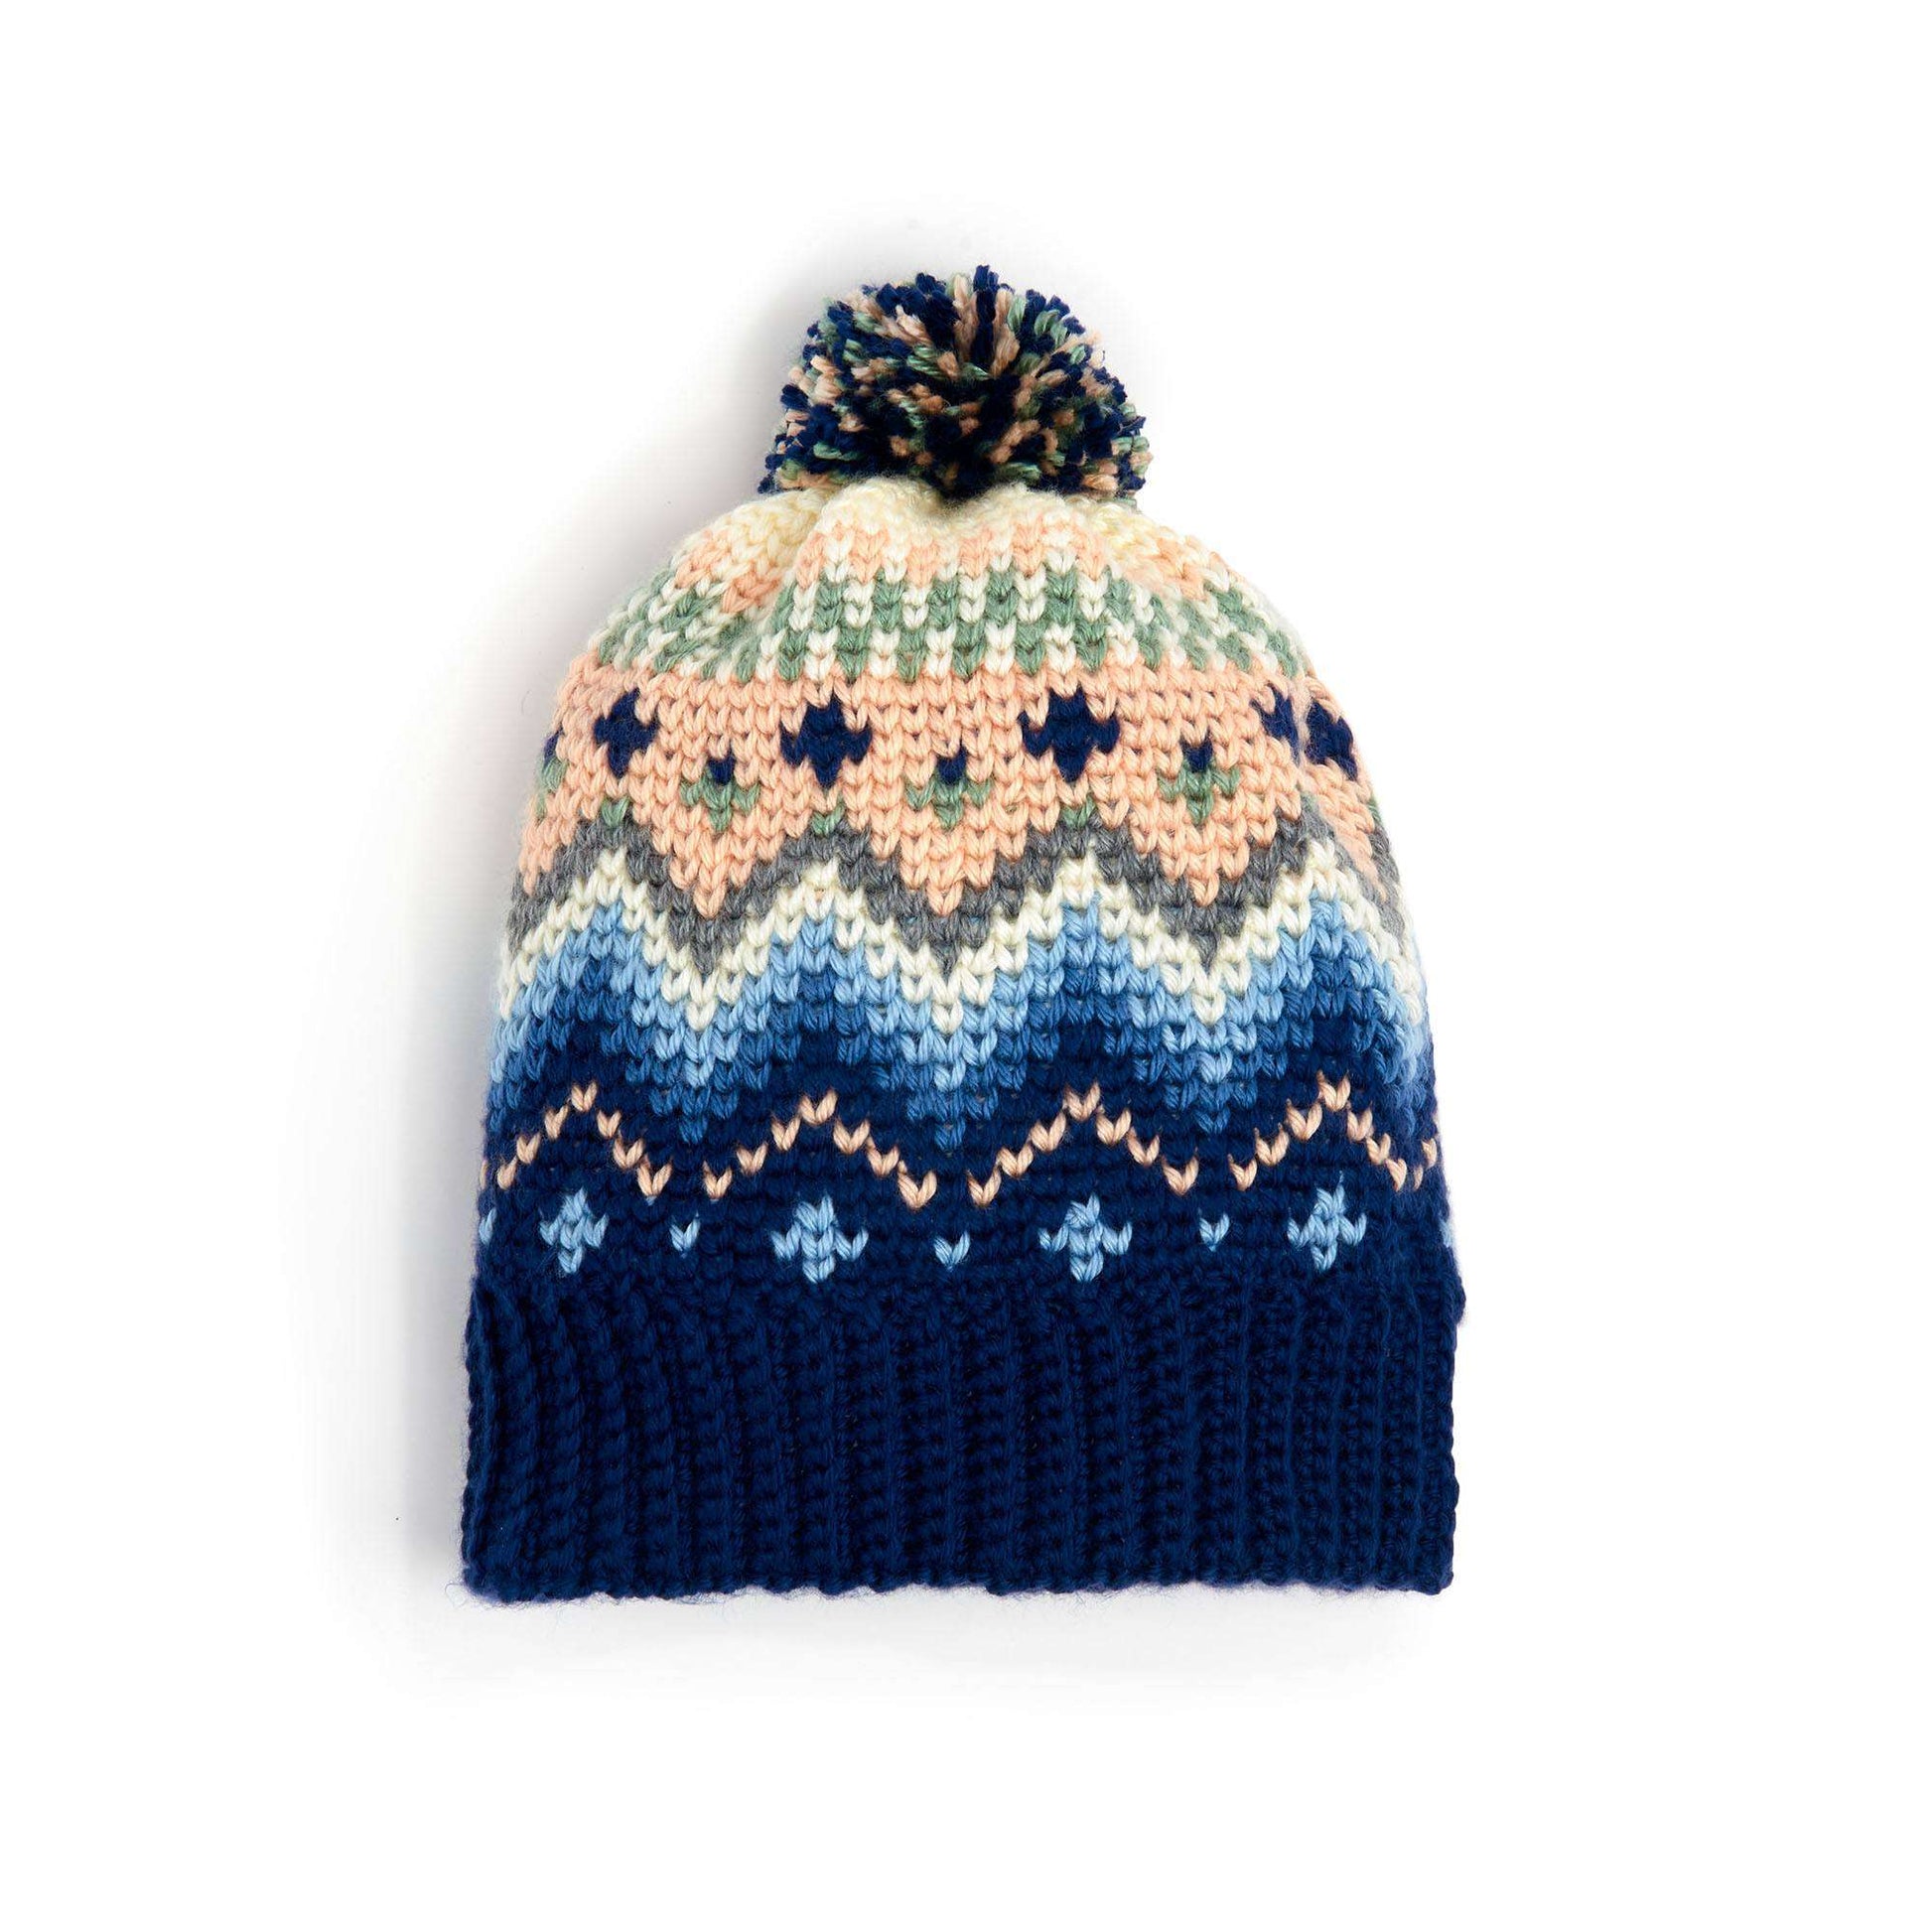 Caron Crochet Fair Isle Hat Single Size